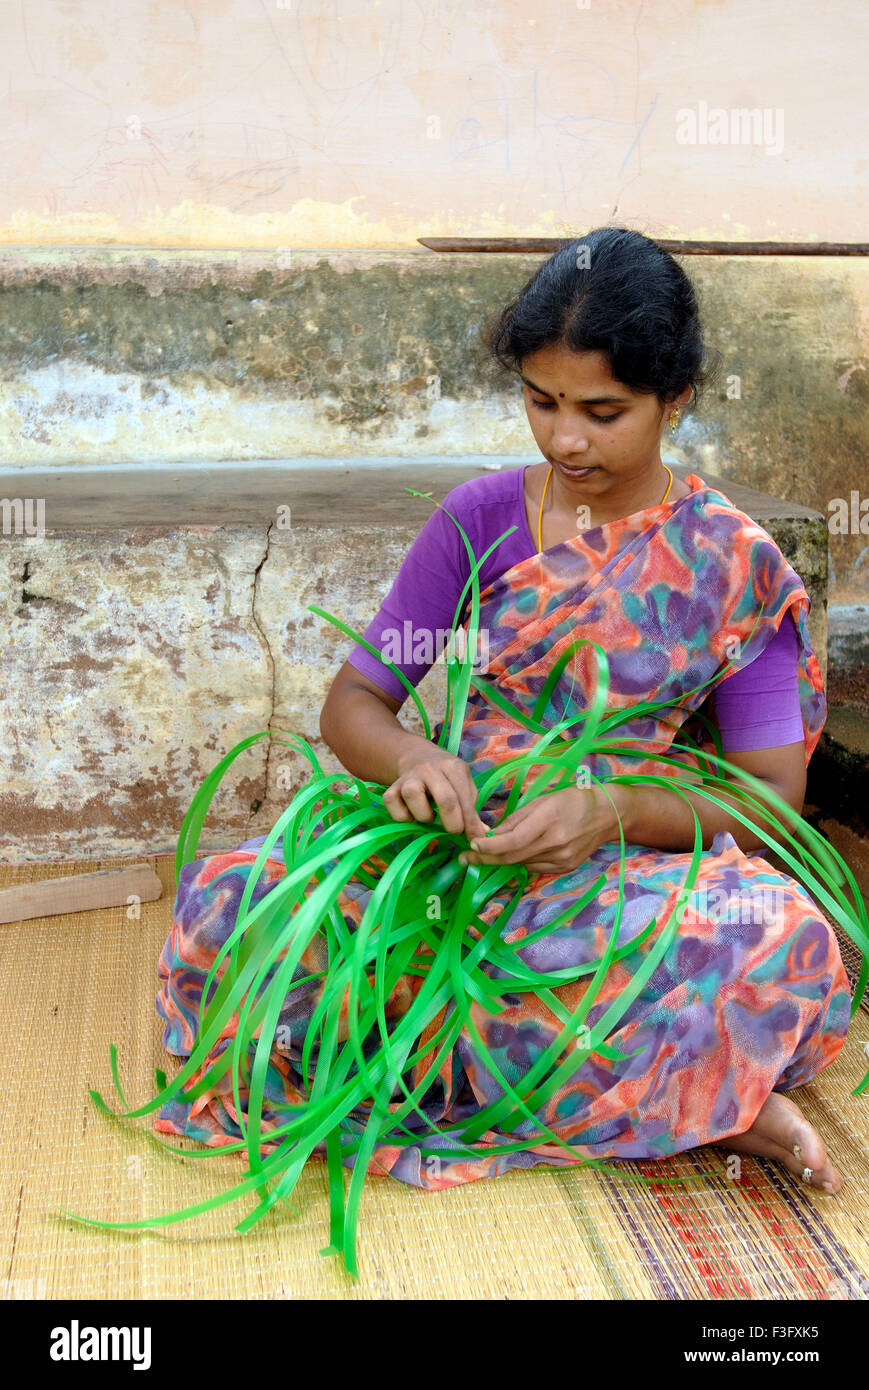 Frau Weben Plastikstreifen Korb, Kunst und Handwerk, Handwerk, Tamil Nadu, Indien, Asien, Indien, Asien, MR#777A, dpa 134981 maa Stockfoto